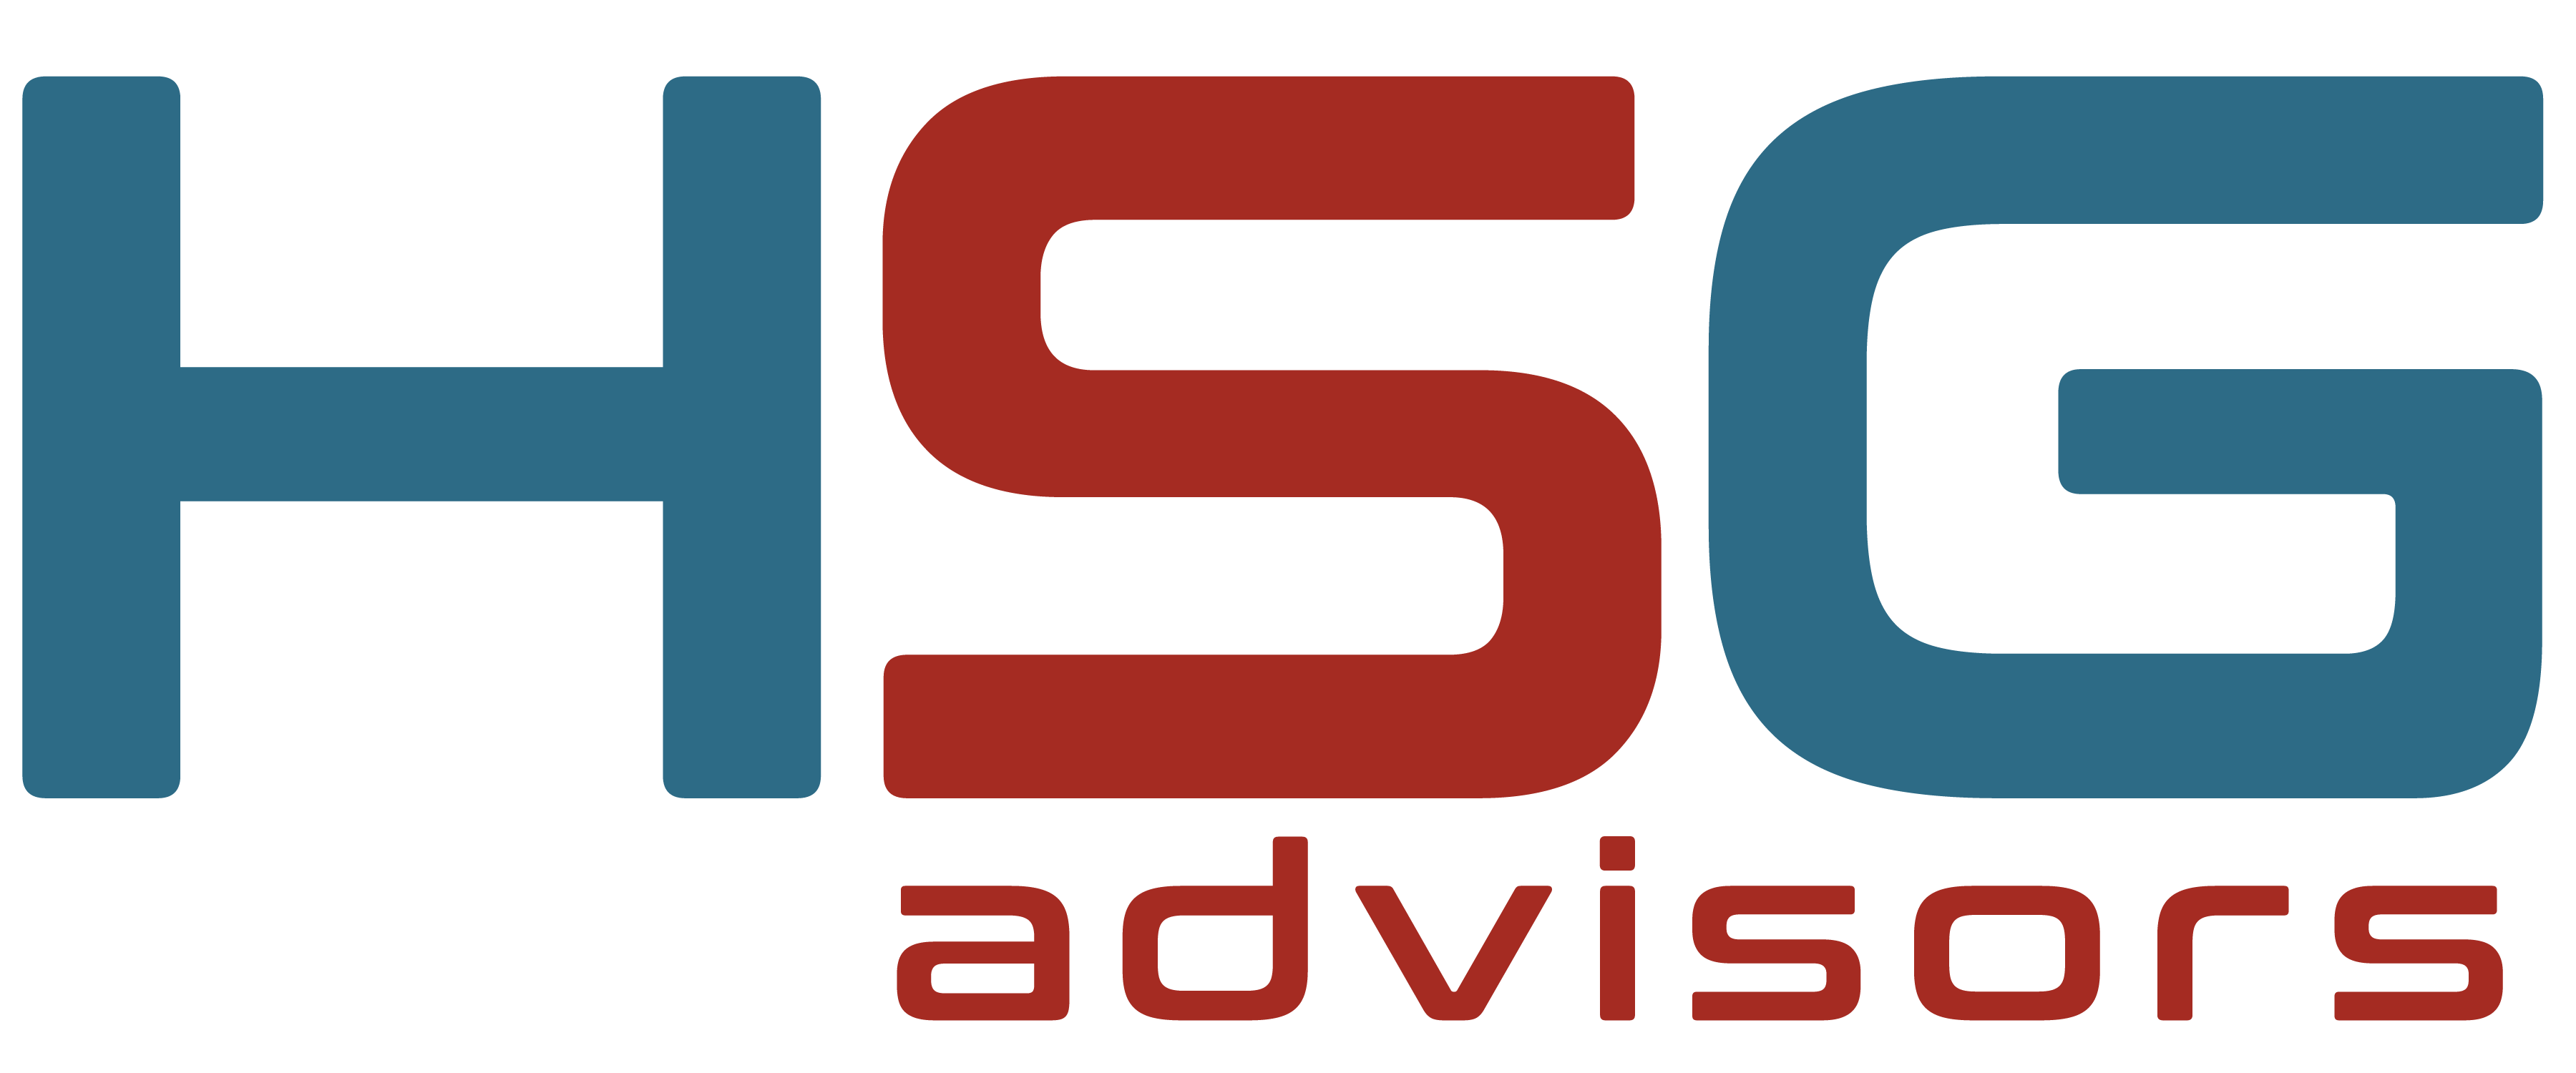 HSG Advisors I Healthcare Consulting & Analytics